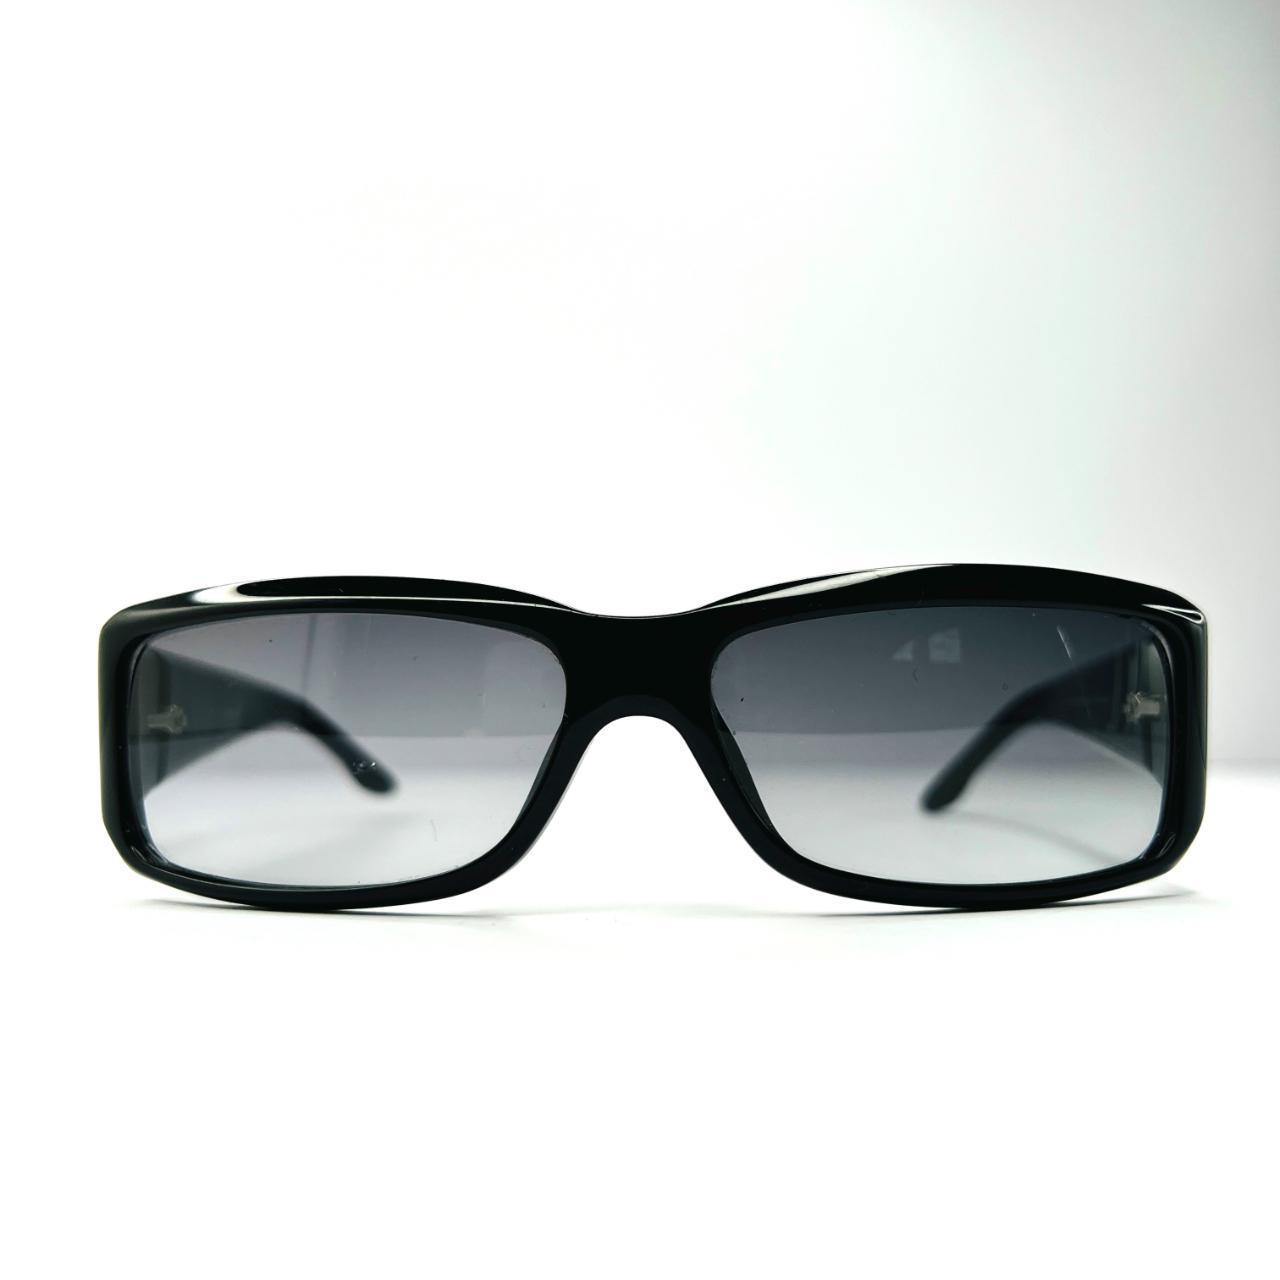 Authentic Dior Sunglasses Chunky Black DIOR NIGHT 4... - Depop